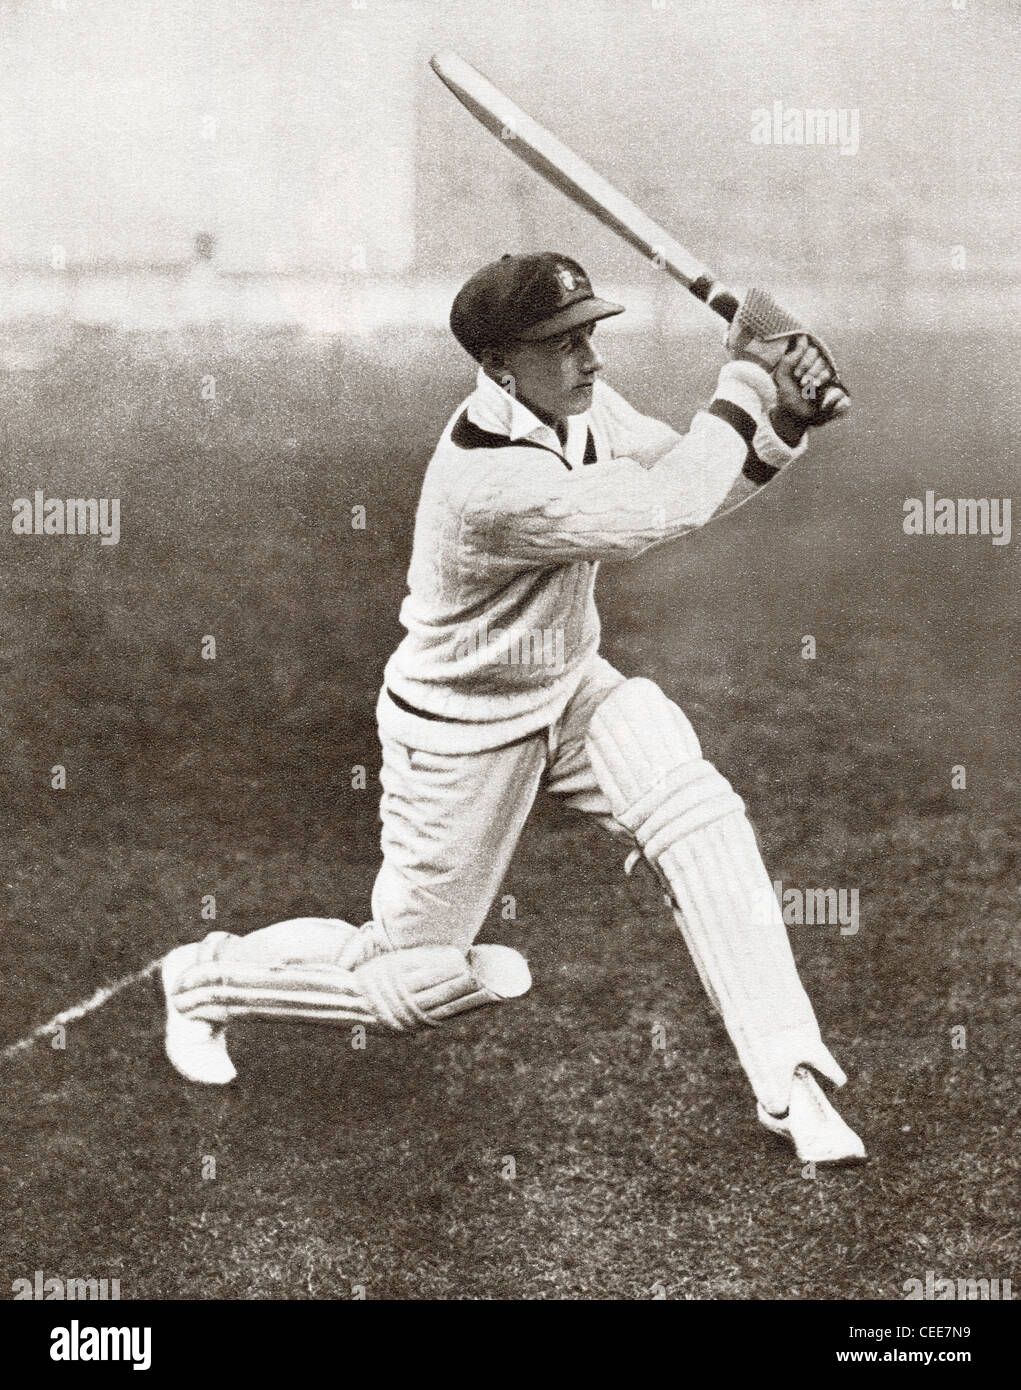 Sir Donald Bradman George, 1908 - 2001, spesso denominato "Don". Australian cricketer Foto Stock